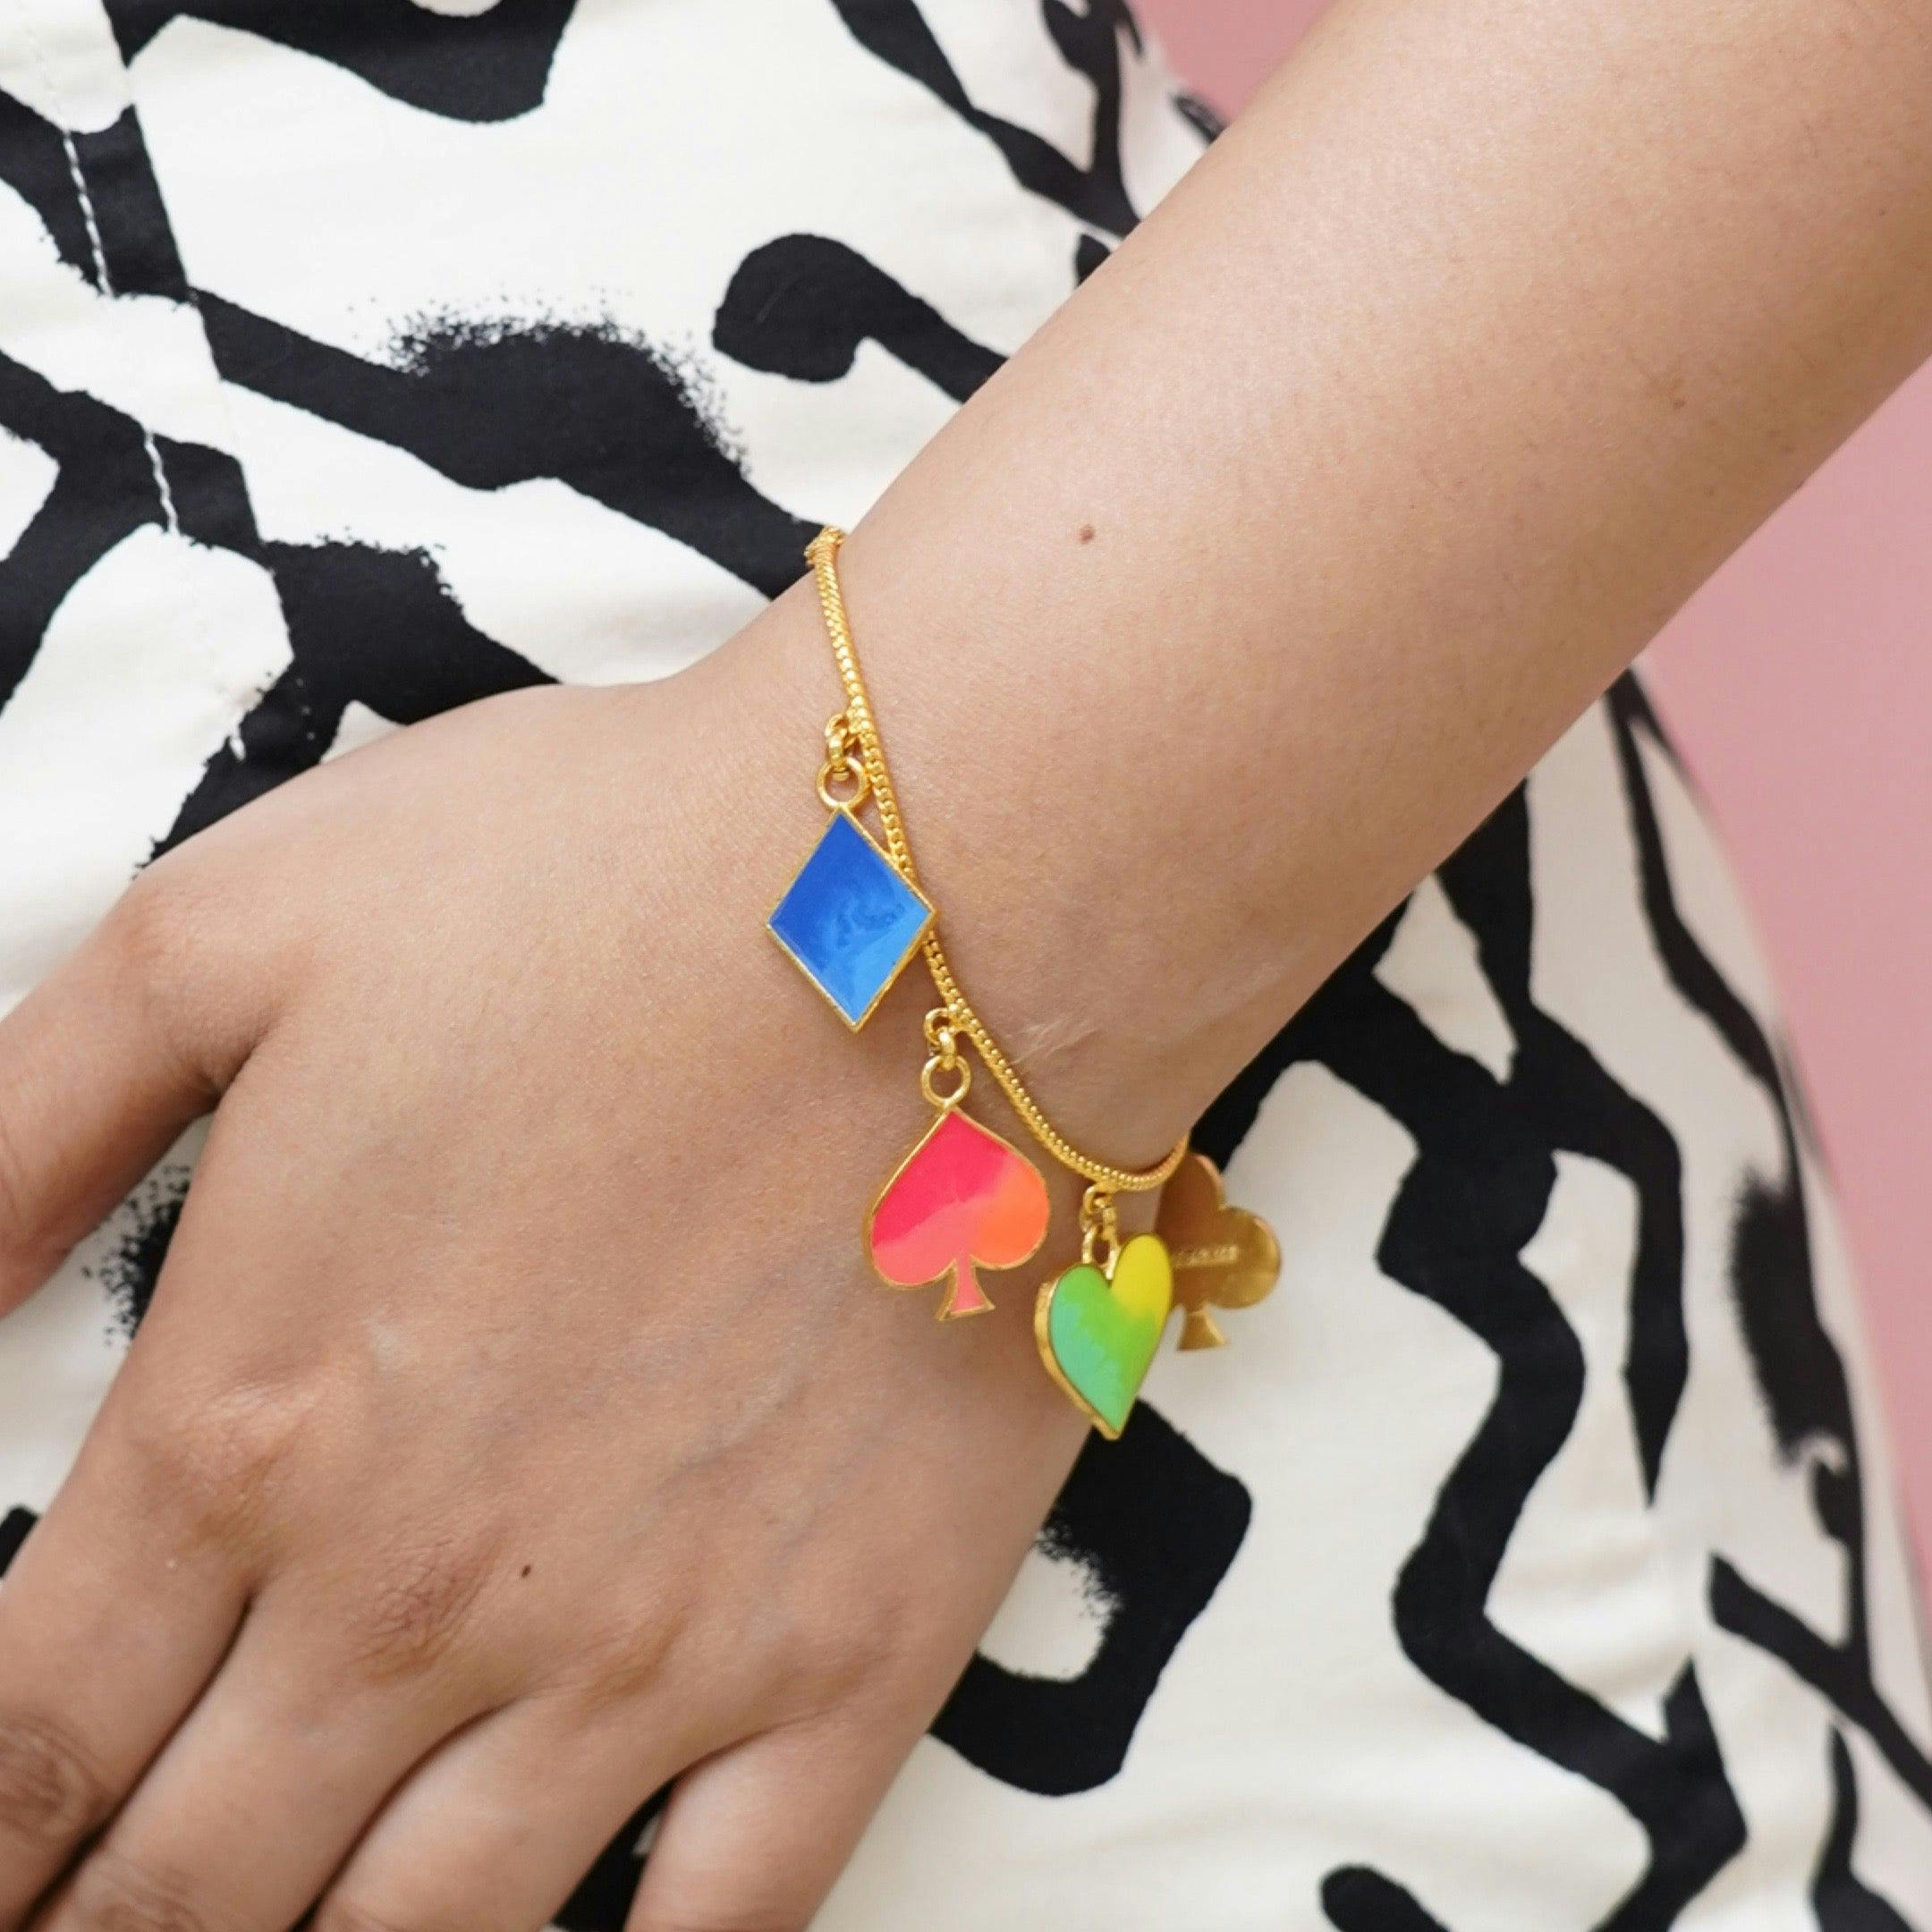 La Fortuna  bracelet, a product by Aditi Bhatt